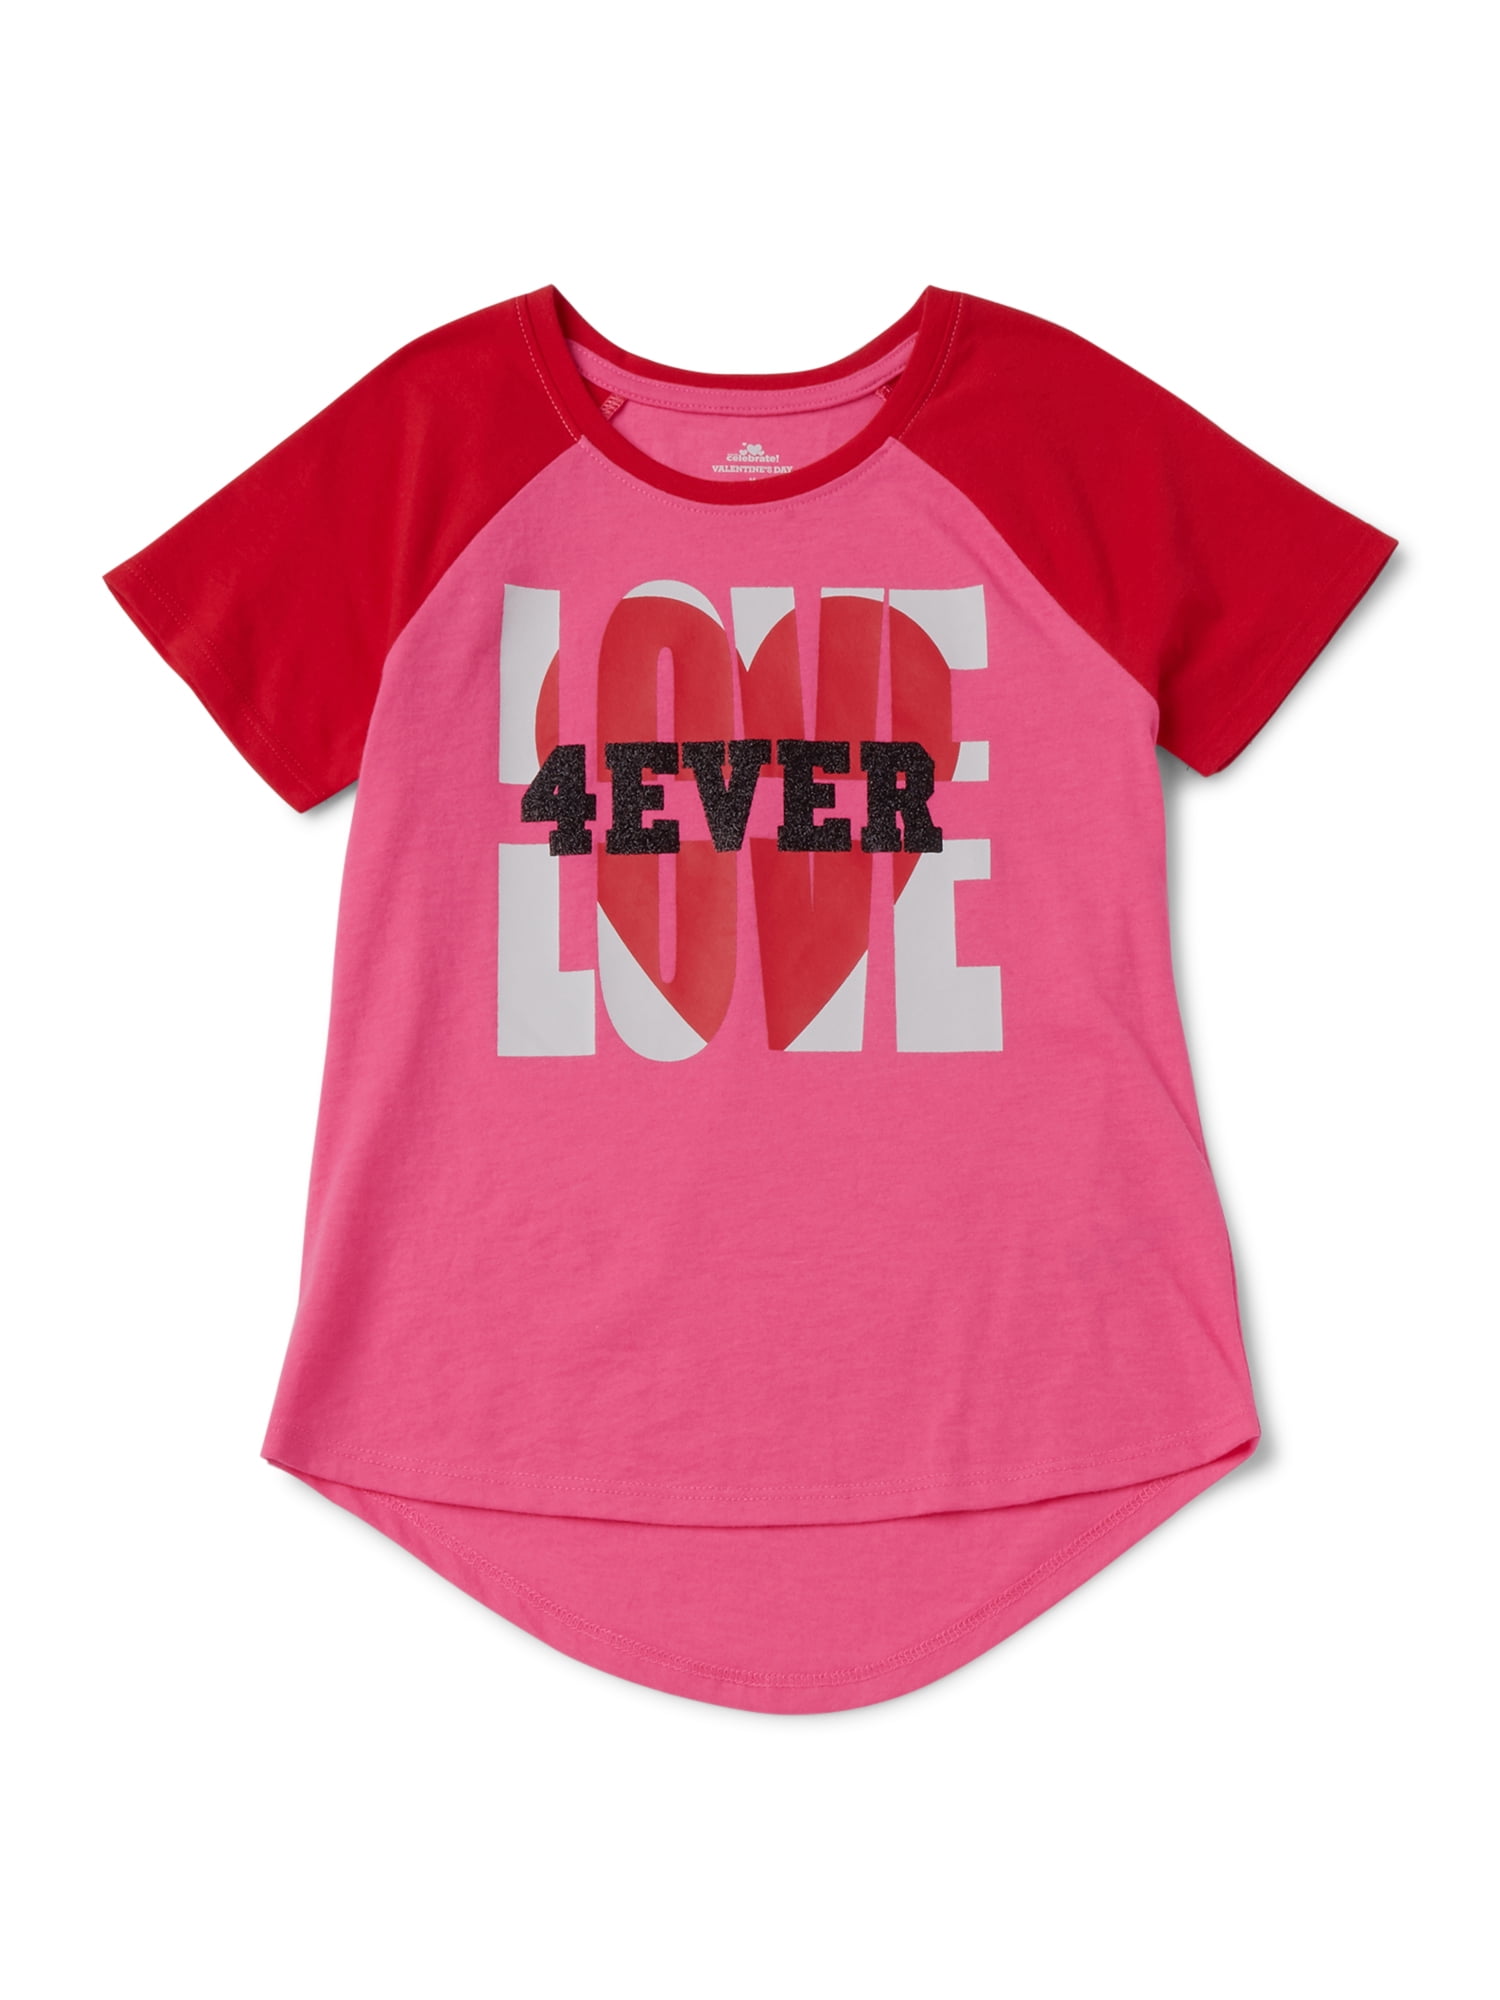 Little Boys Girls Happy Valentine’s Day T-Shirt Tops Shirt Baby Raglan Long Sleeve Casual Tees 